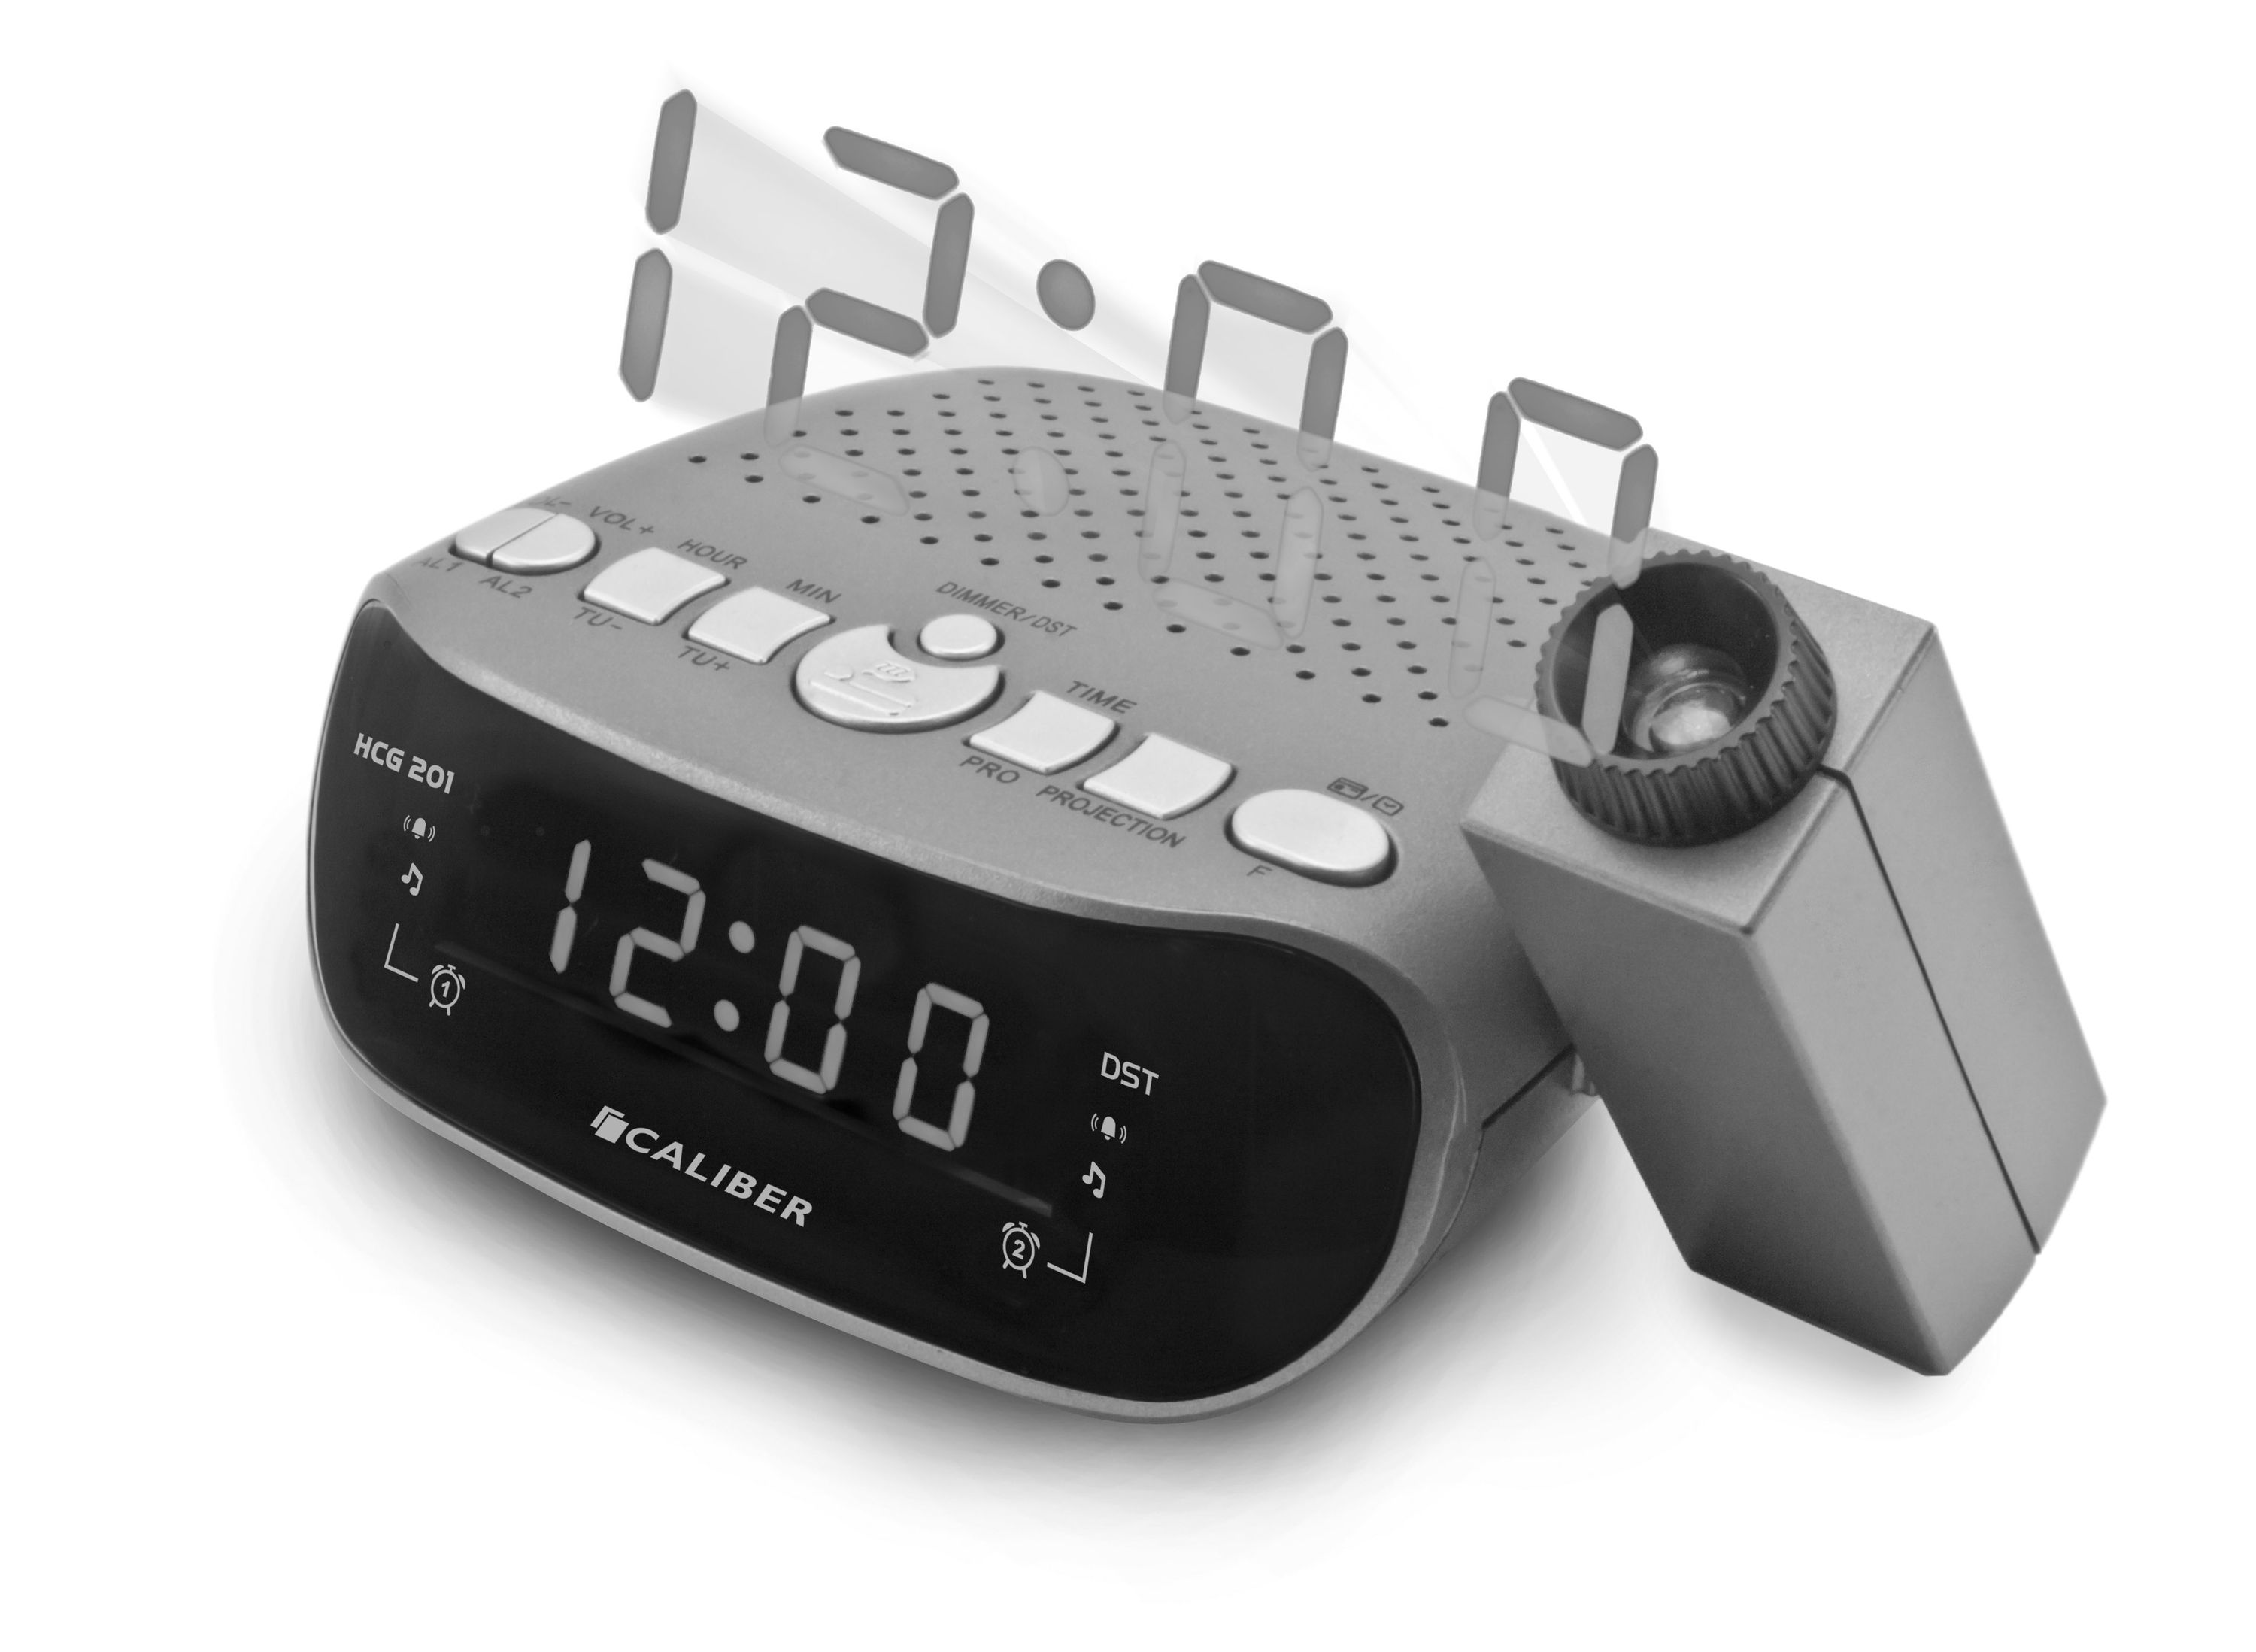 FM, Radio-Uhr, Bluetooth, Grau CALIBER HCG201